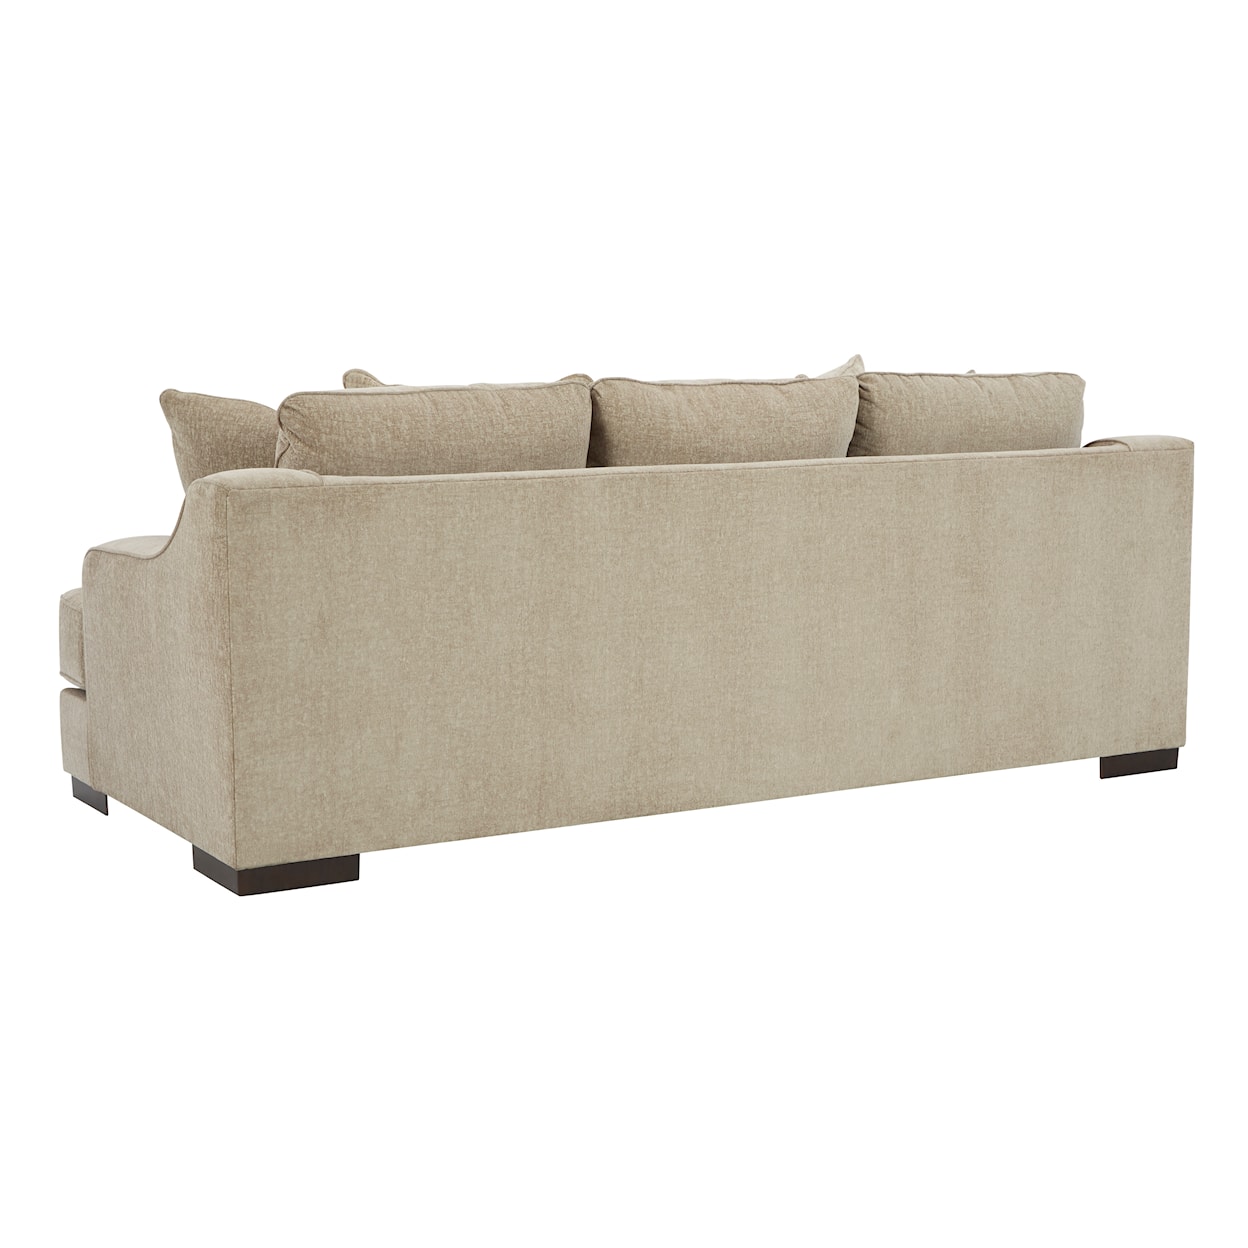 Benchcraft Lessinger Sofa